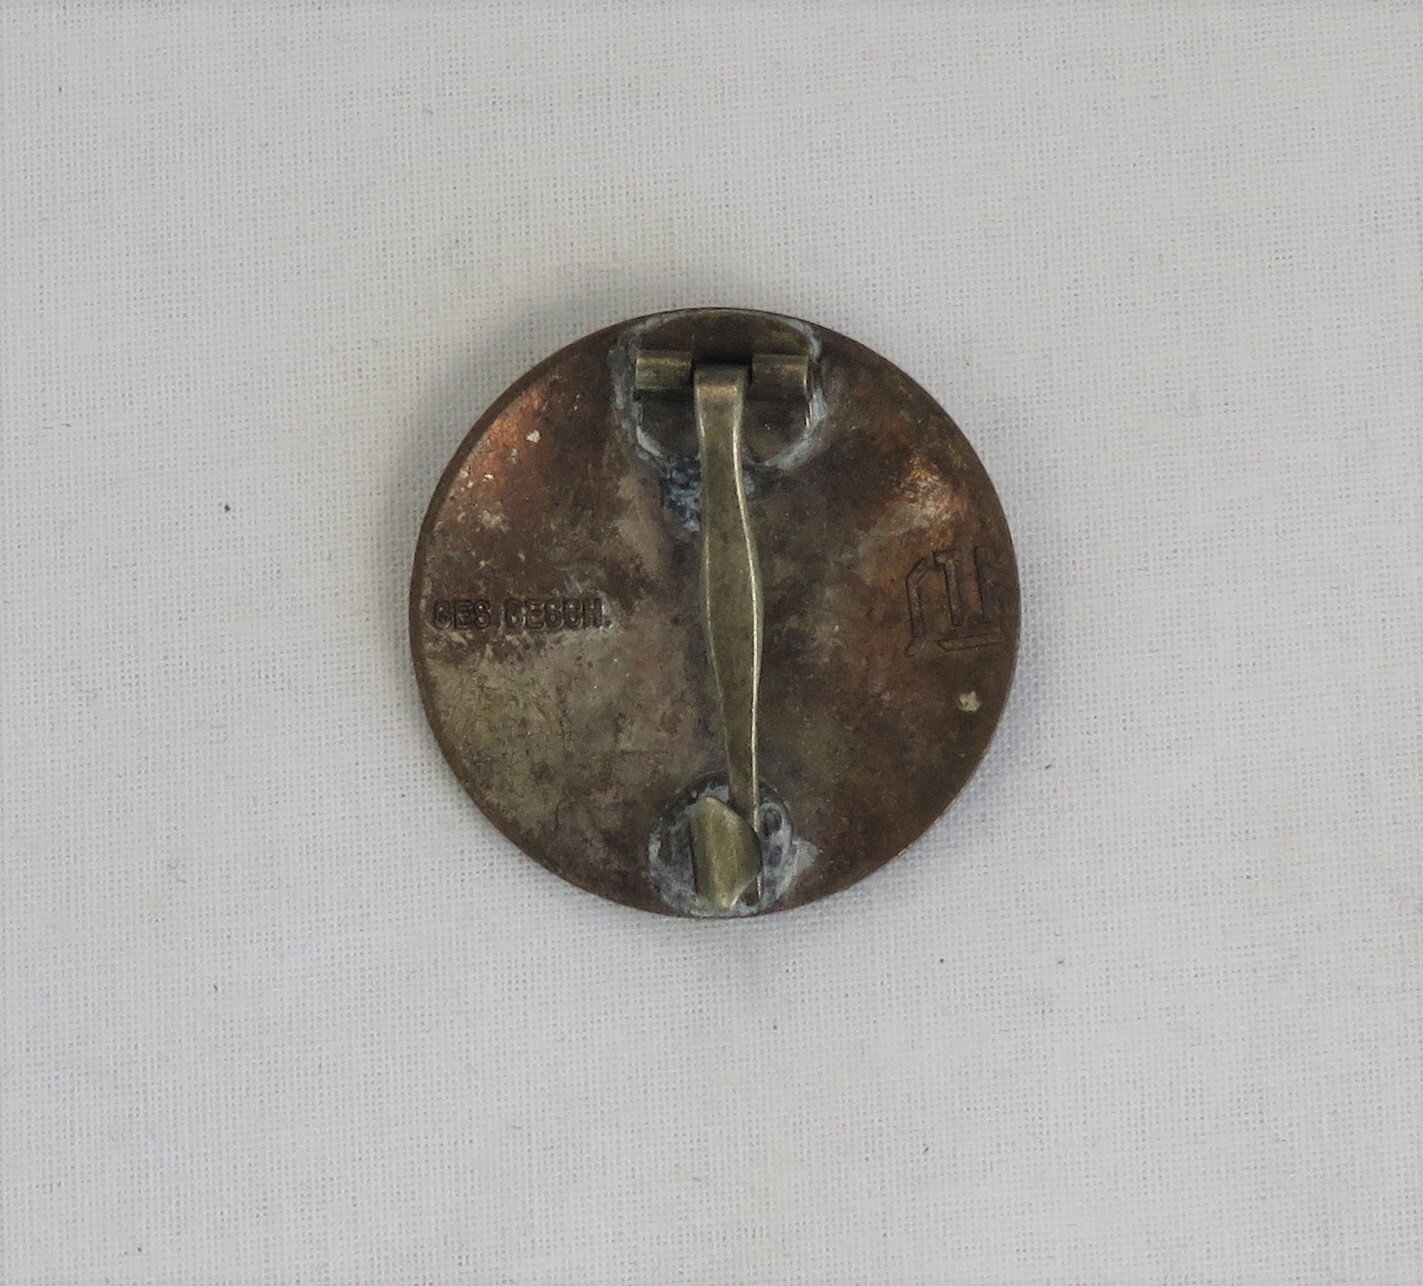 Germany. Stahlhelm Membership Badge 1924 — WW2 Collectors World